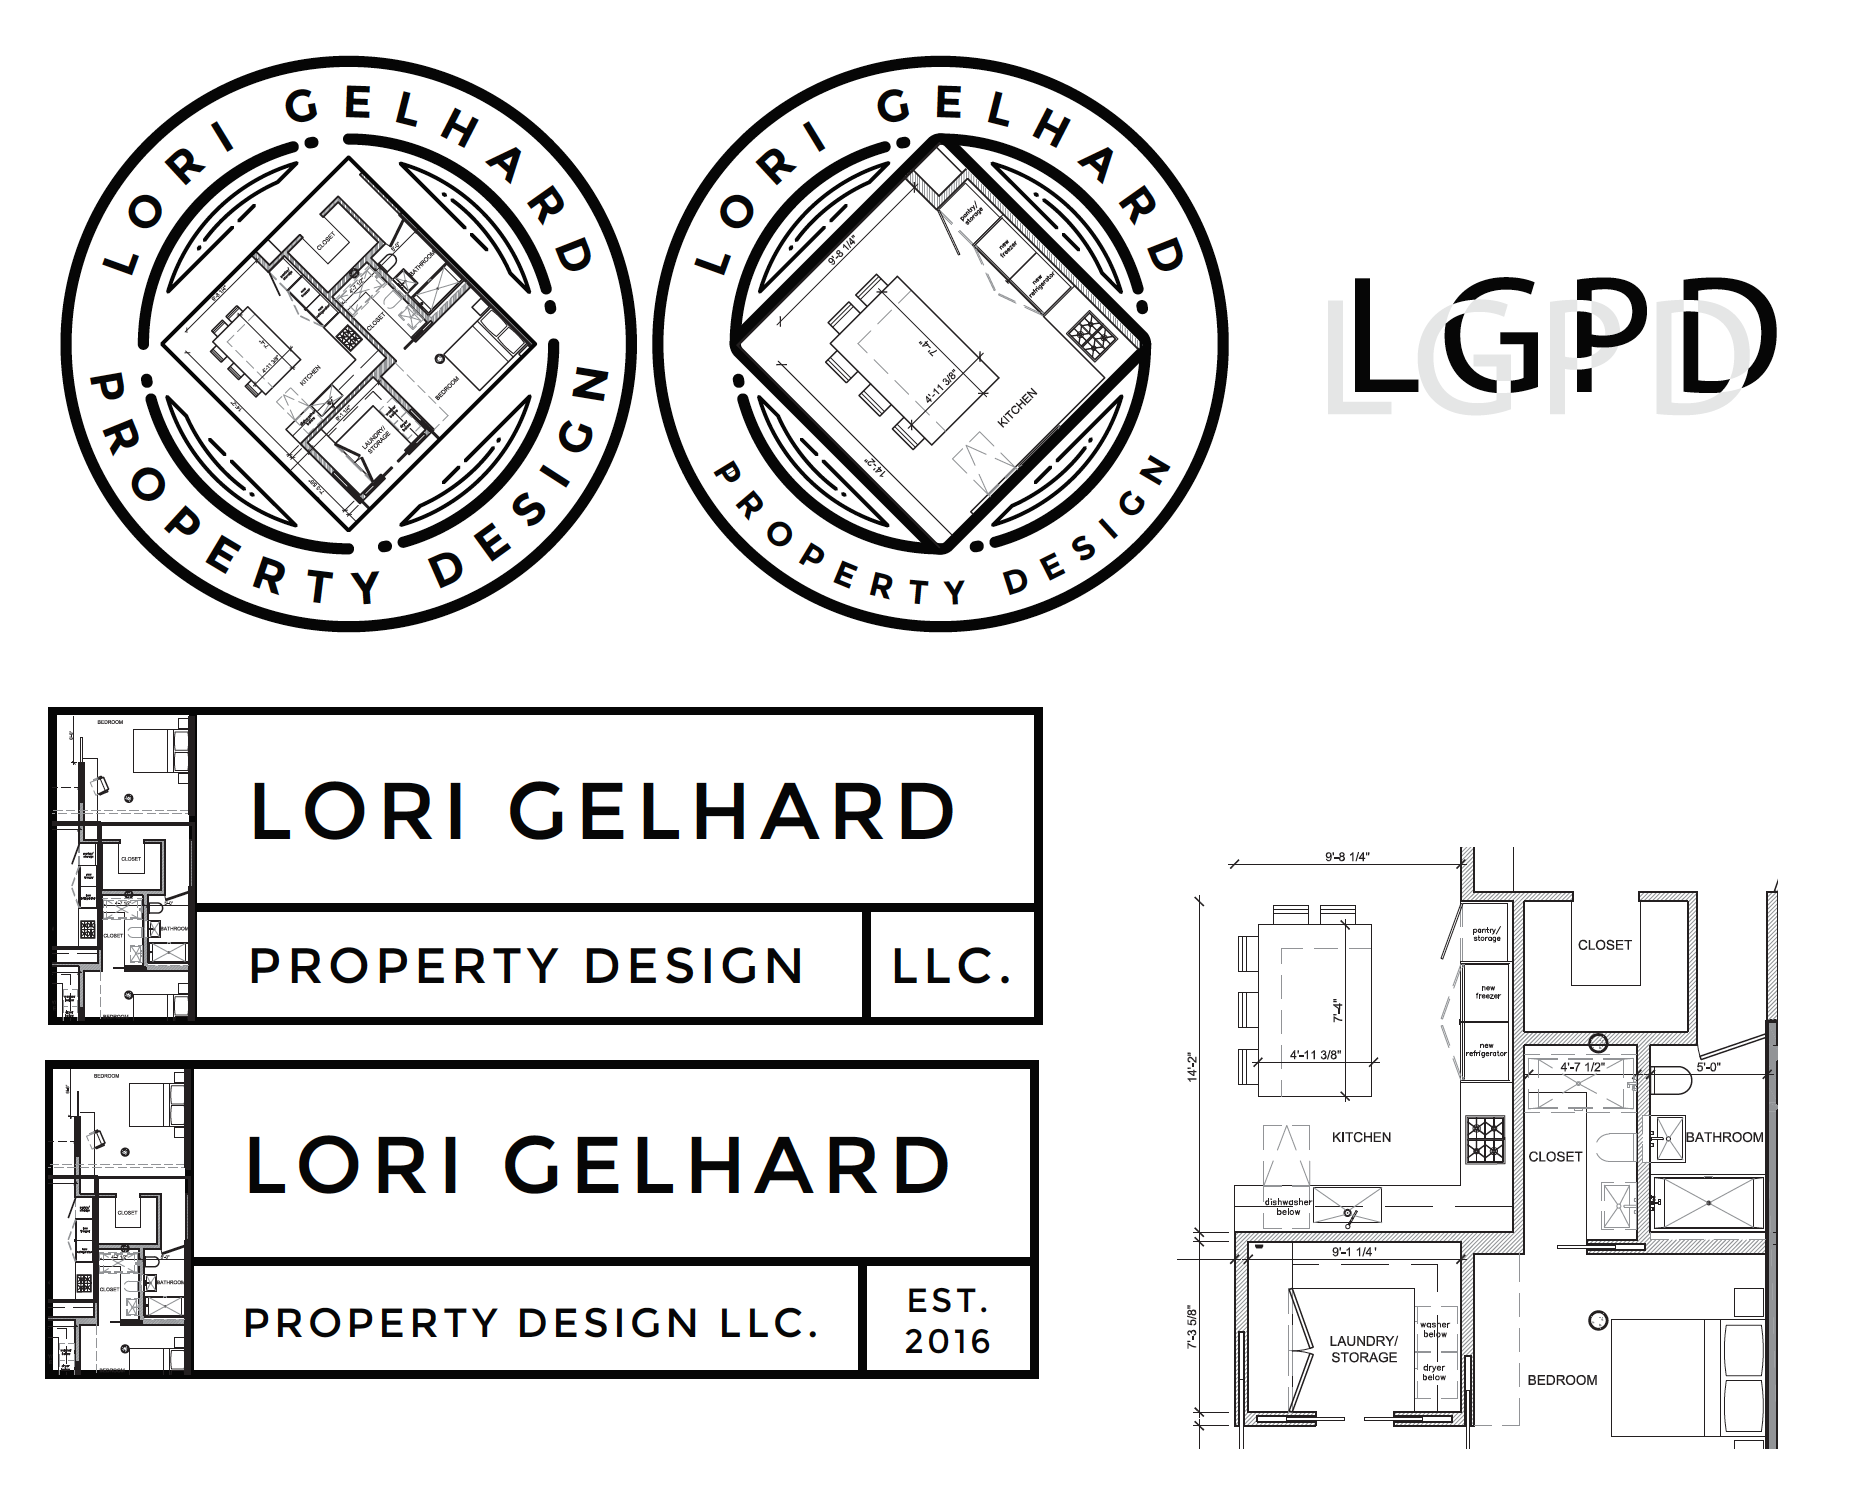 LG Property Design